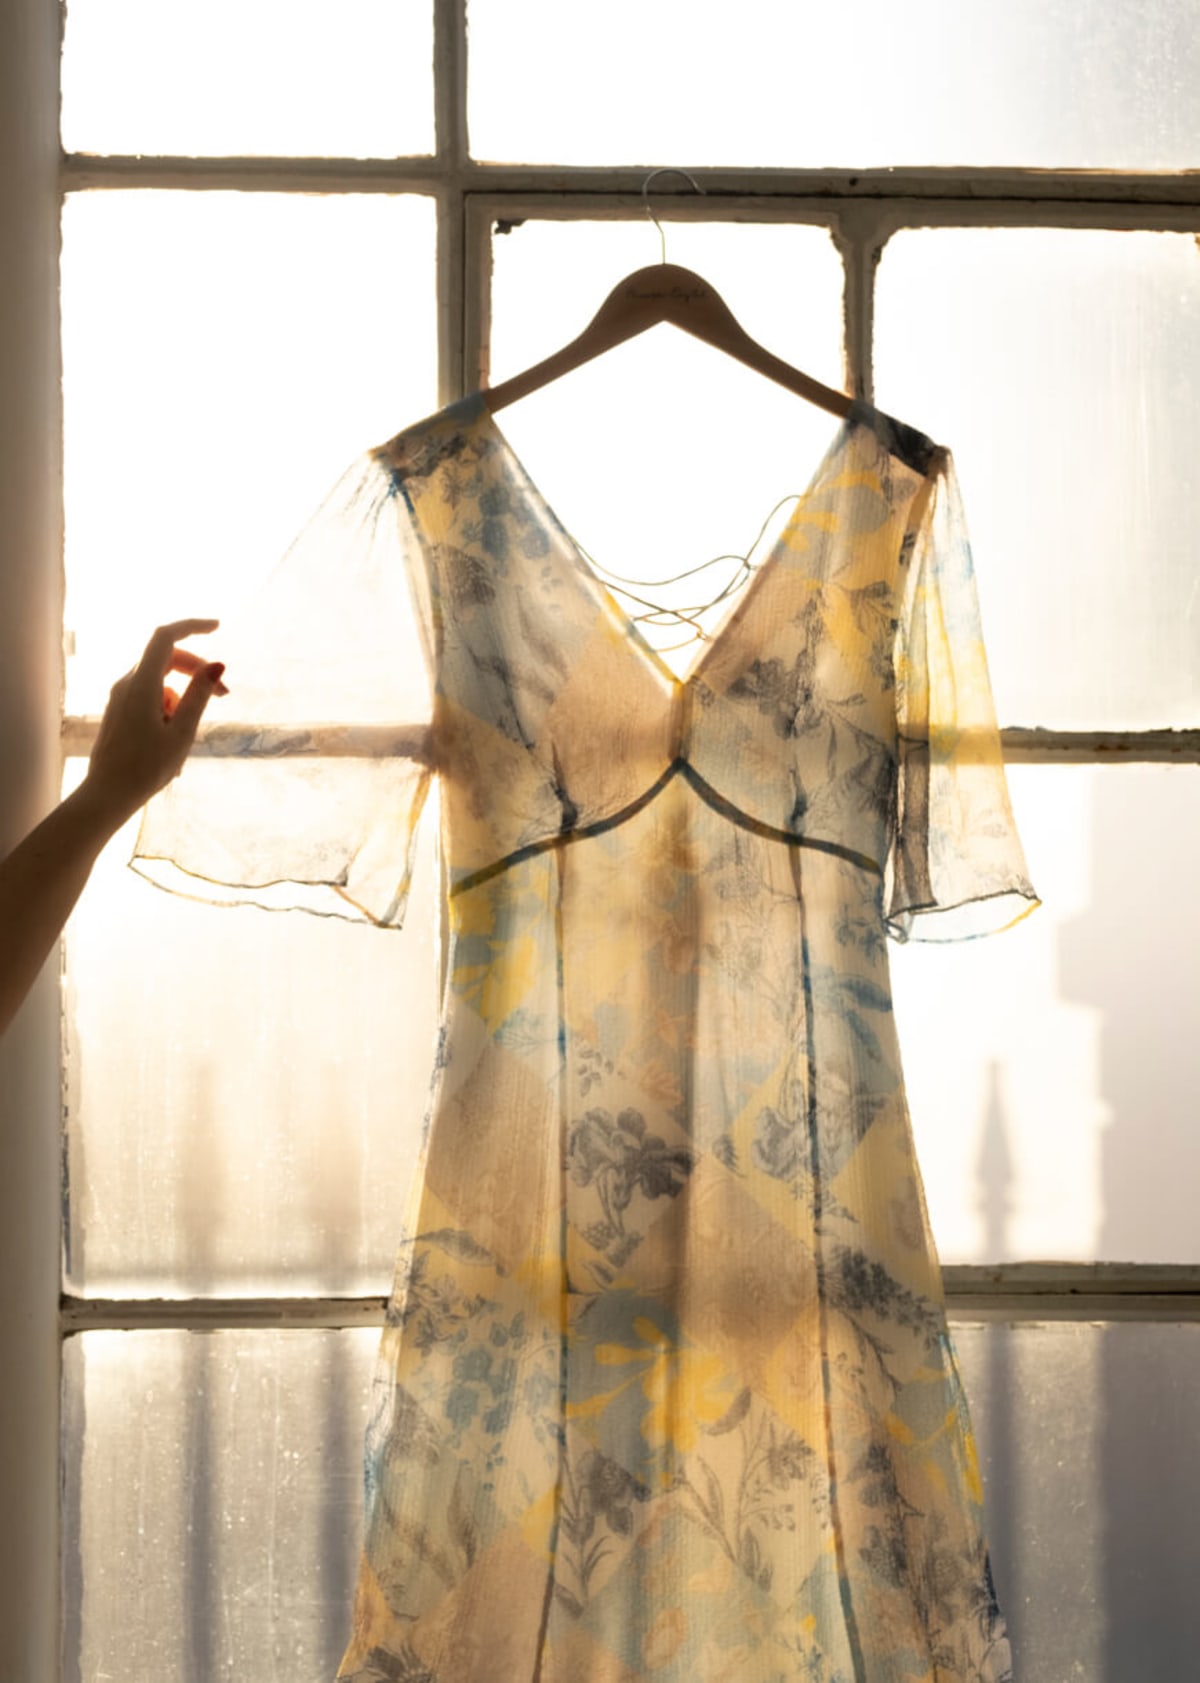 Patchwork print dress on a hanger